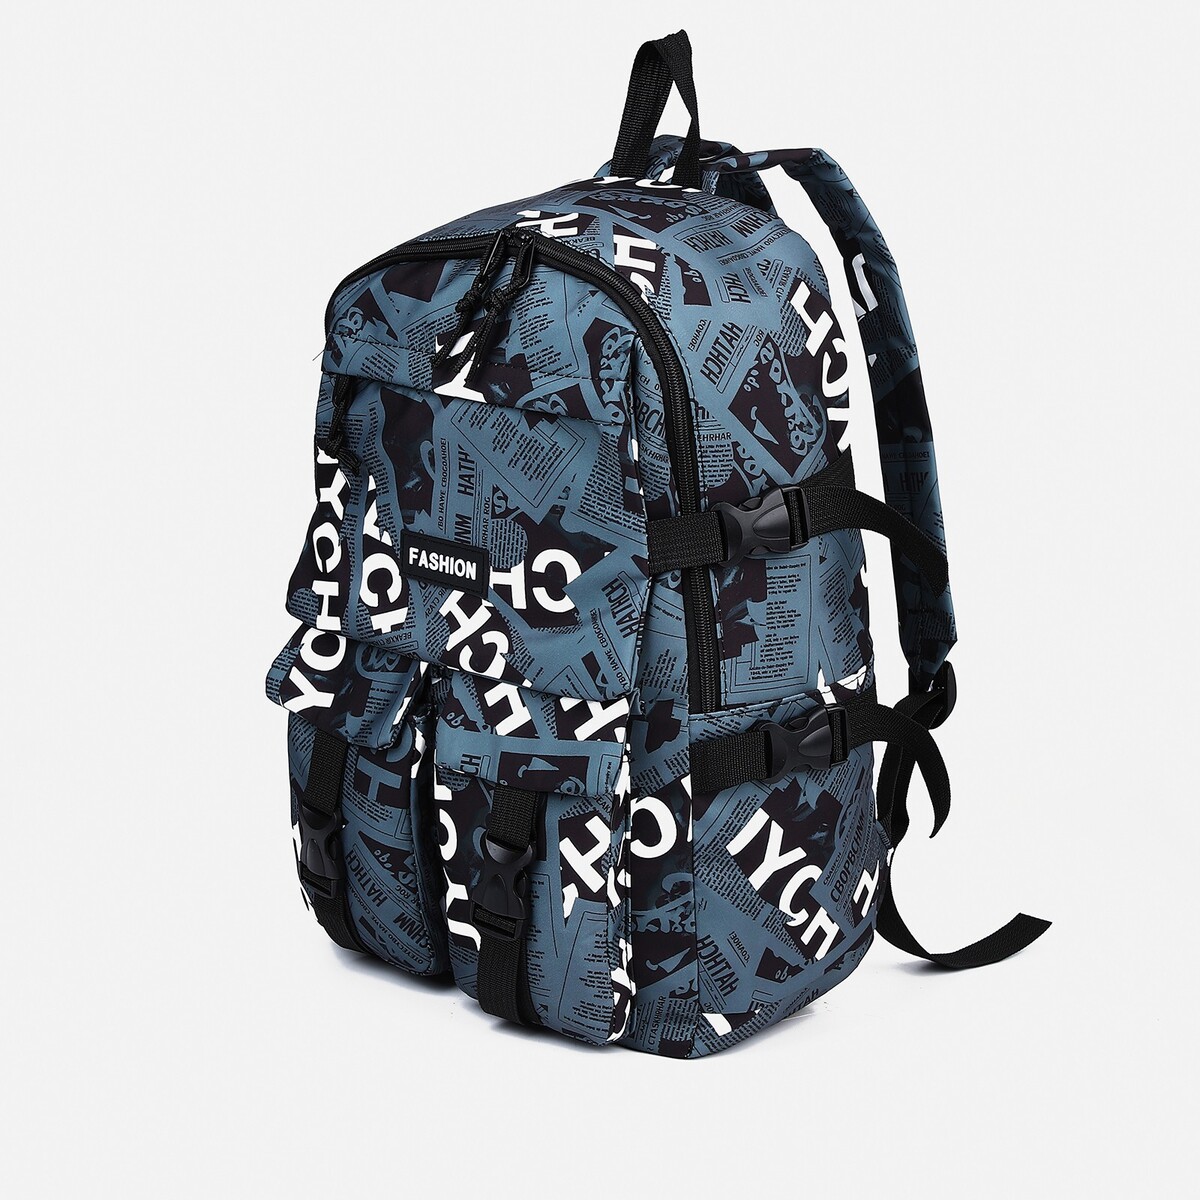 Рюкзак молодежный из текстиля на молнии, 3 кармана, цвет серый рюкзак молодежный из текстиля 3 кармана голубой серый